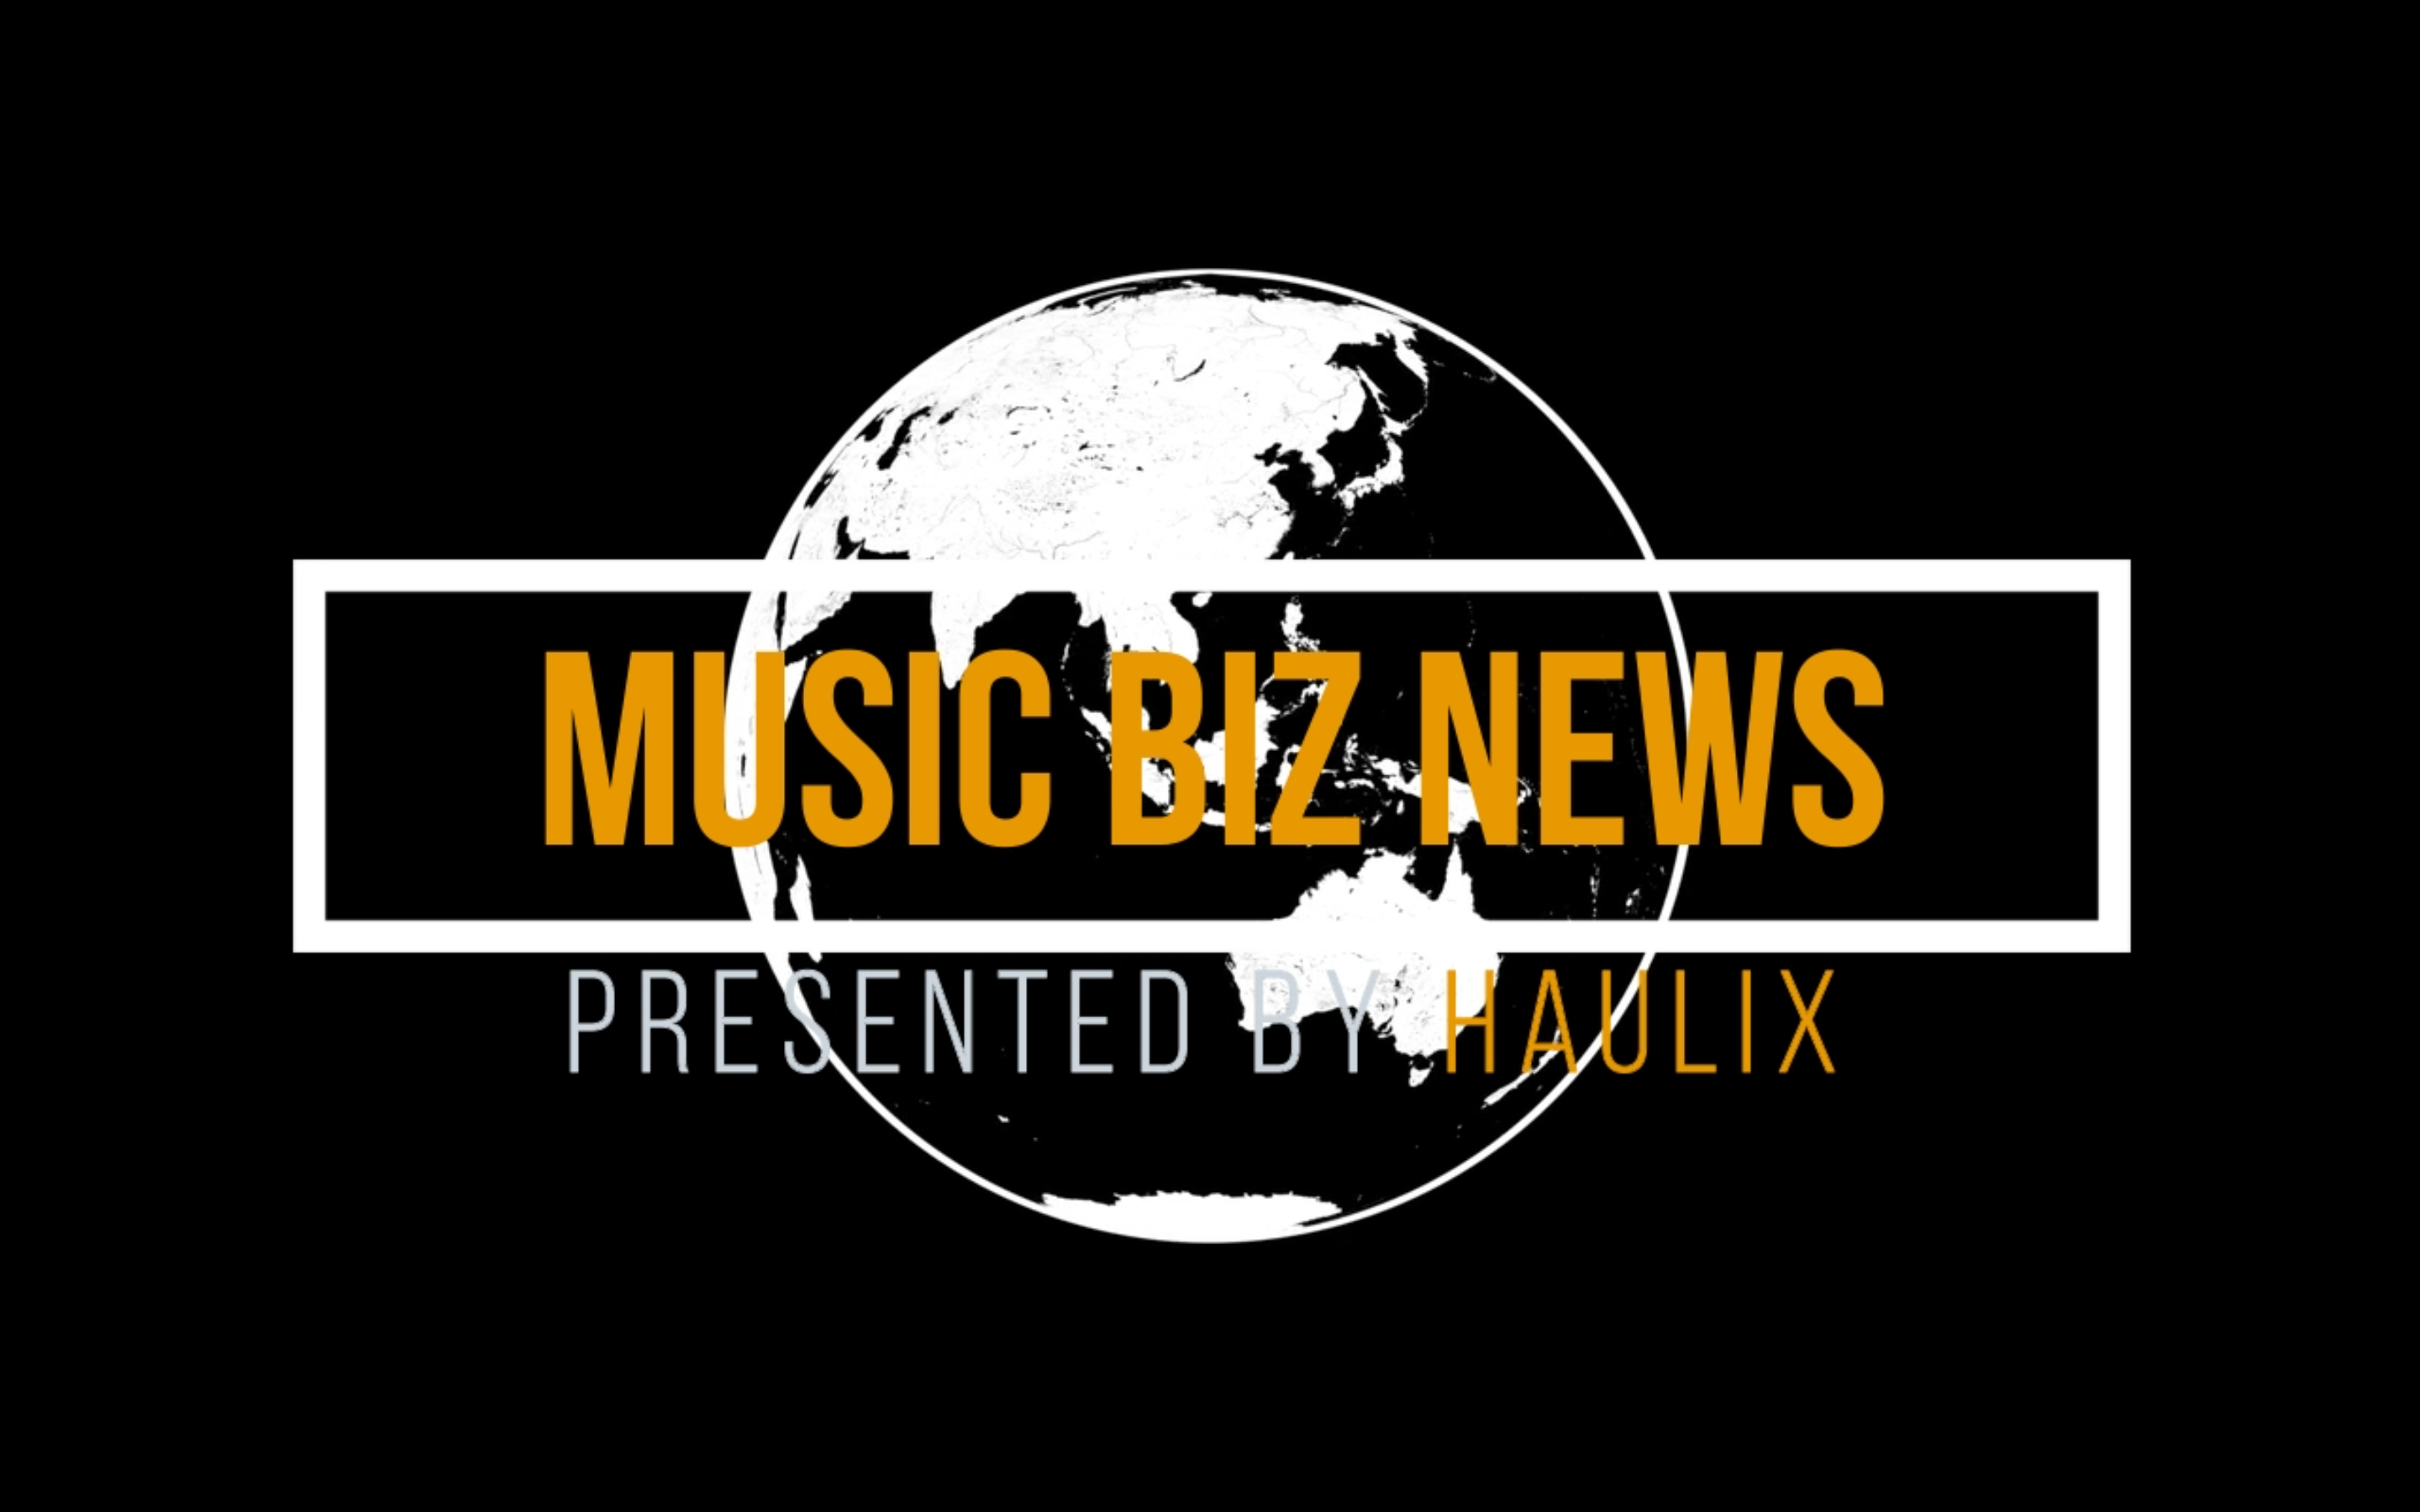 Music News, Music Business News, Music Industry News